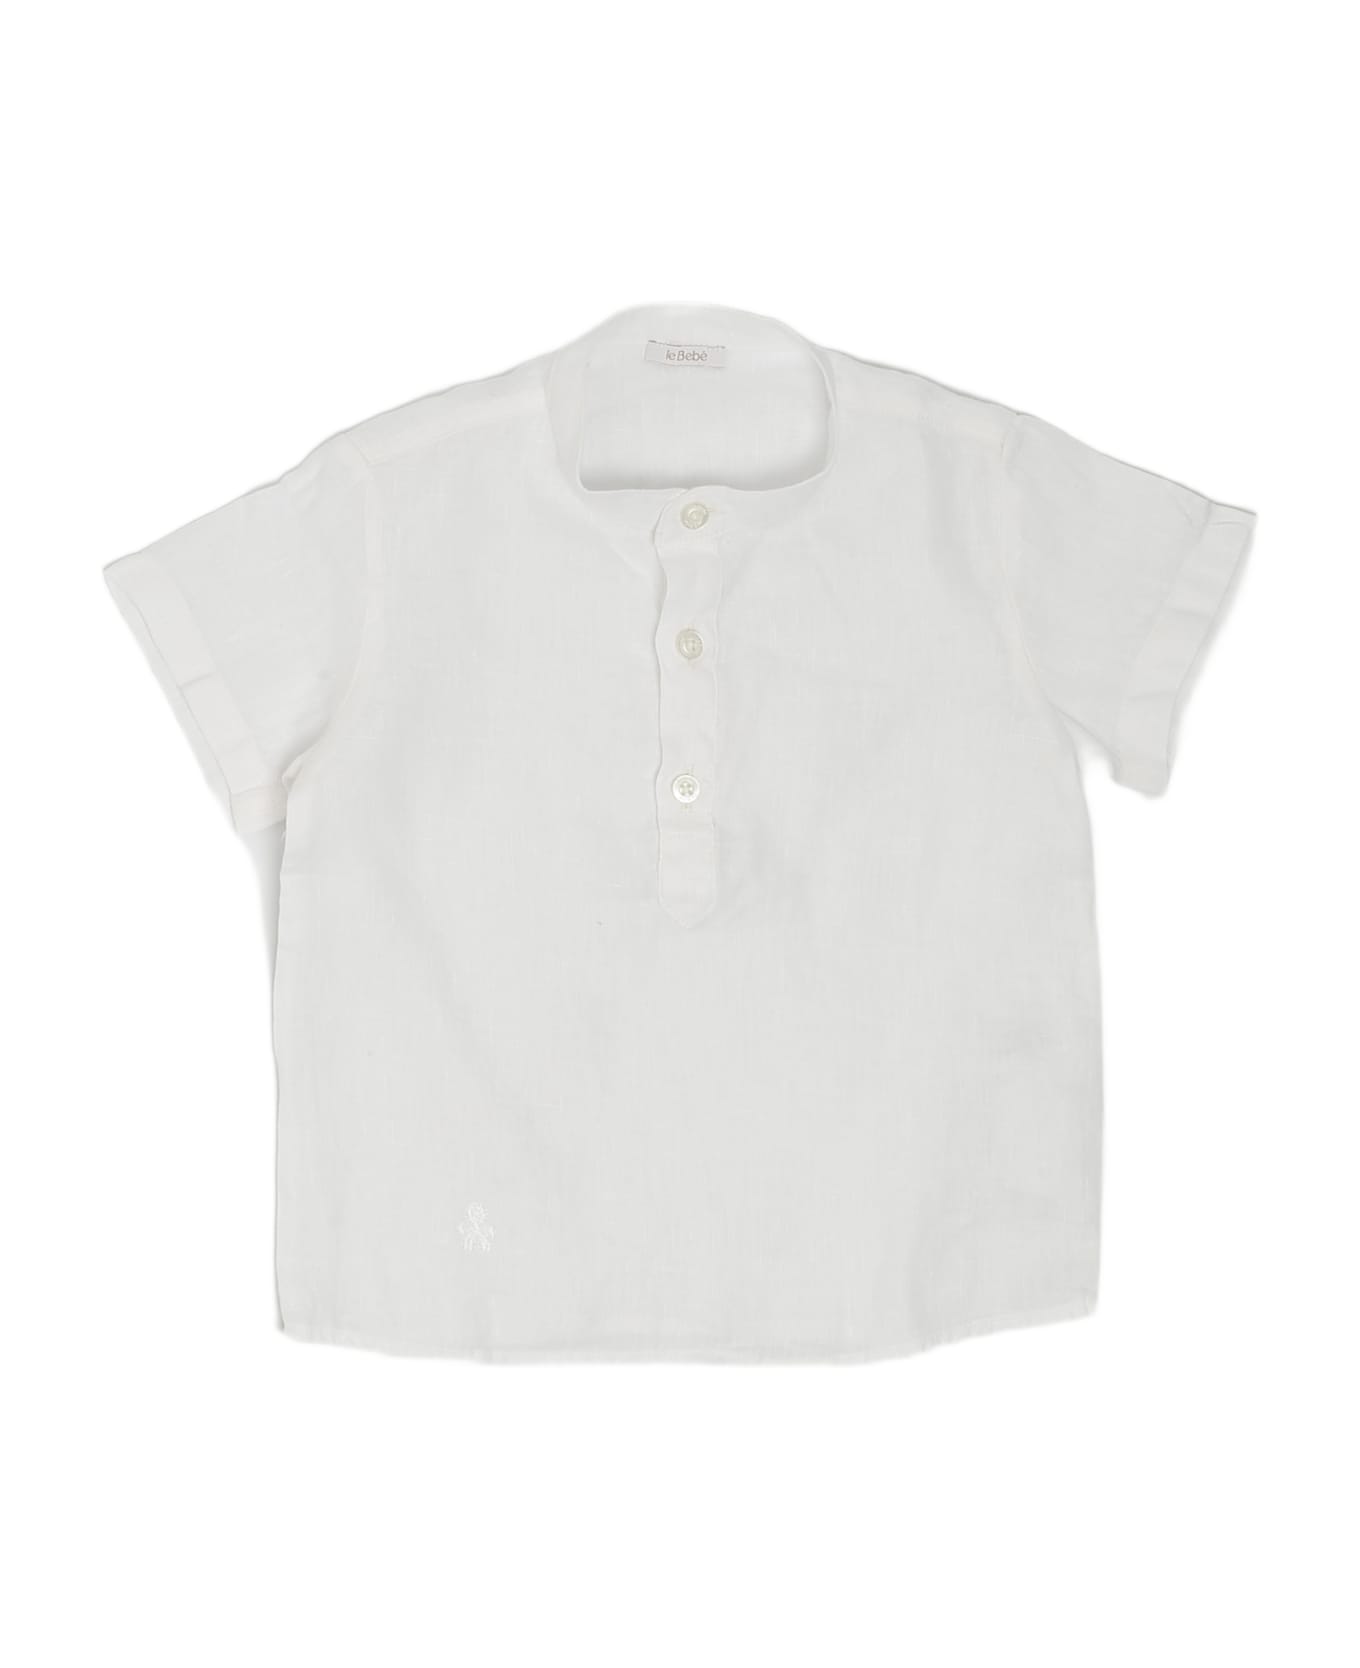 leBebé Shirt Shirt - BIANCO